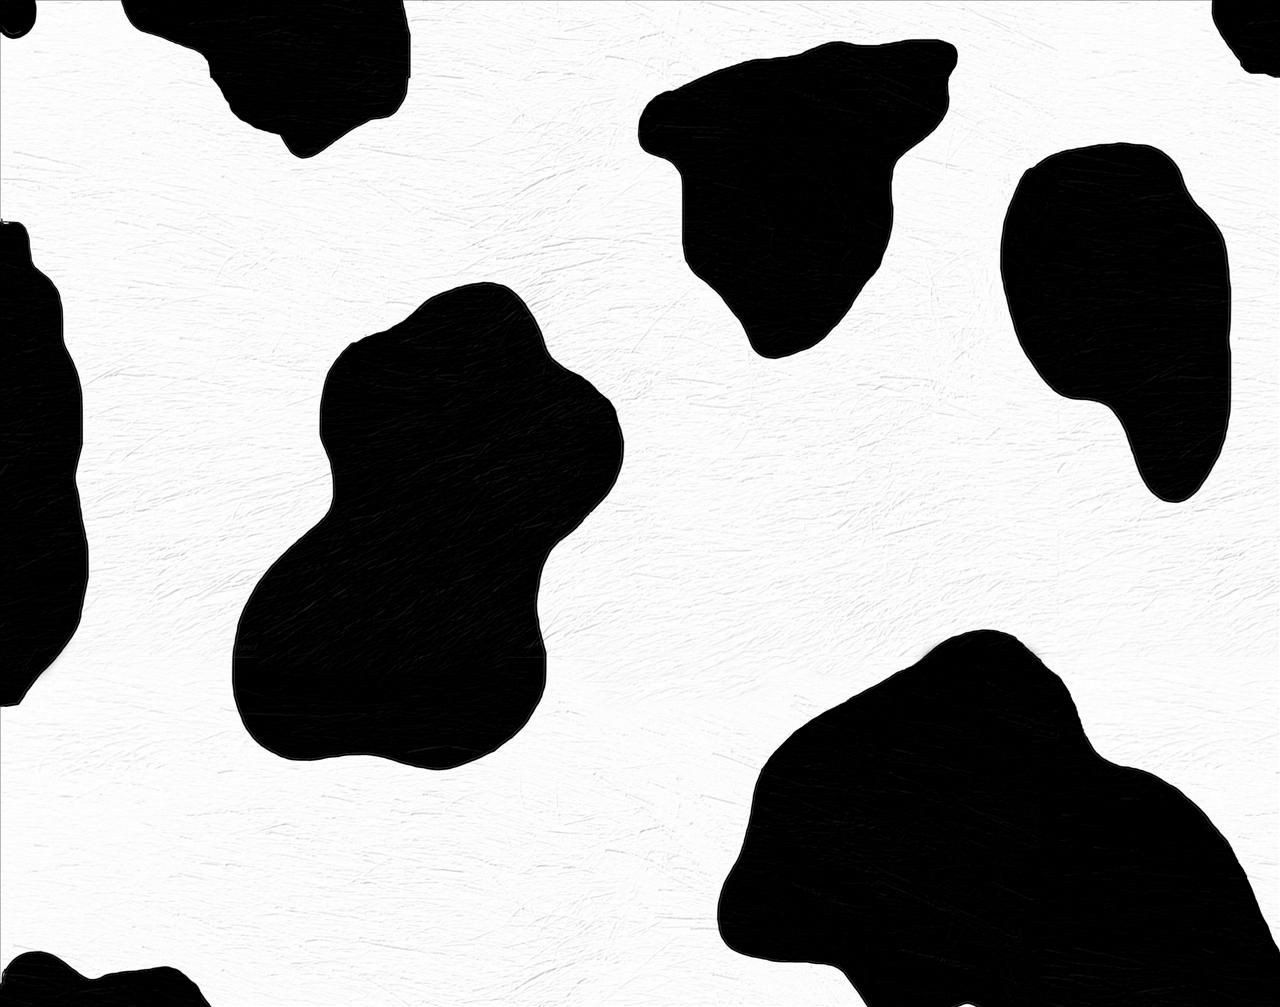 Printable Cow Spots Printable Cow Spots Patterns Cool